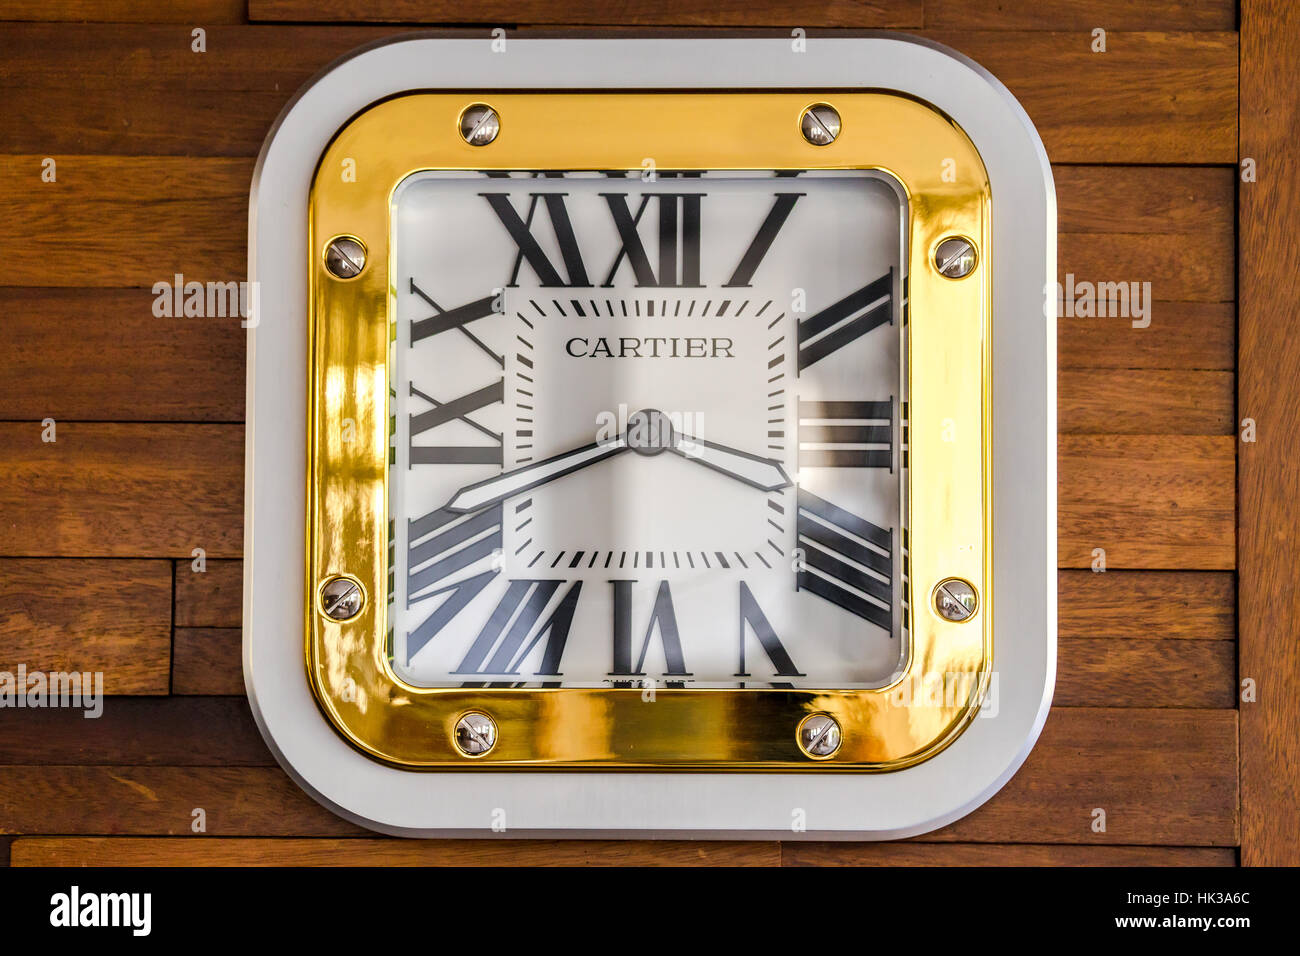 cartier square clock